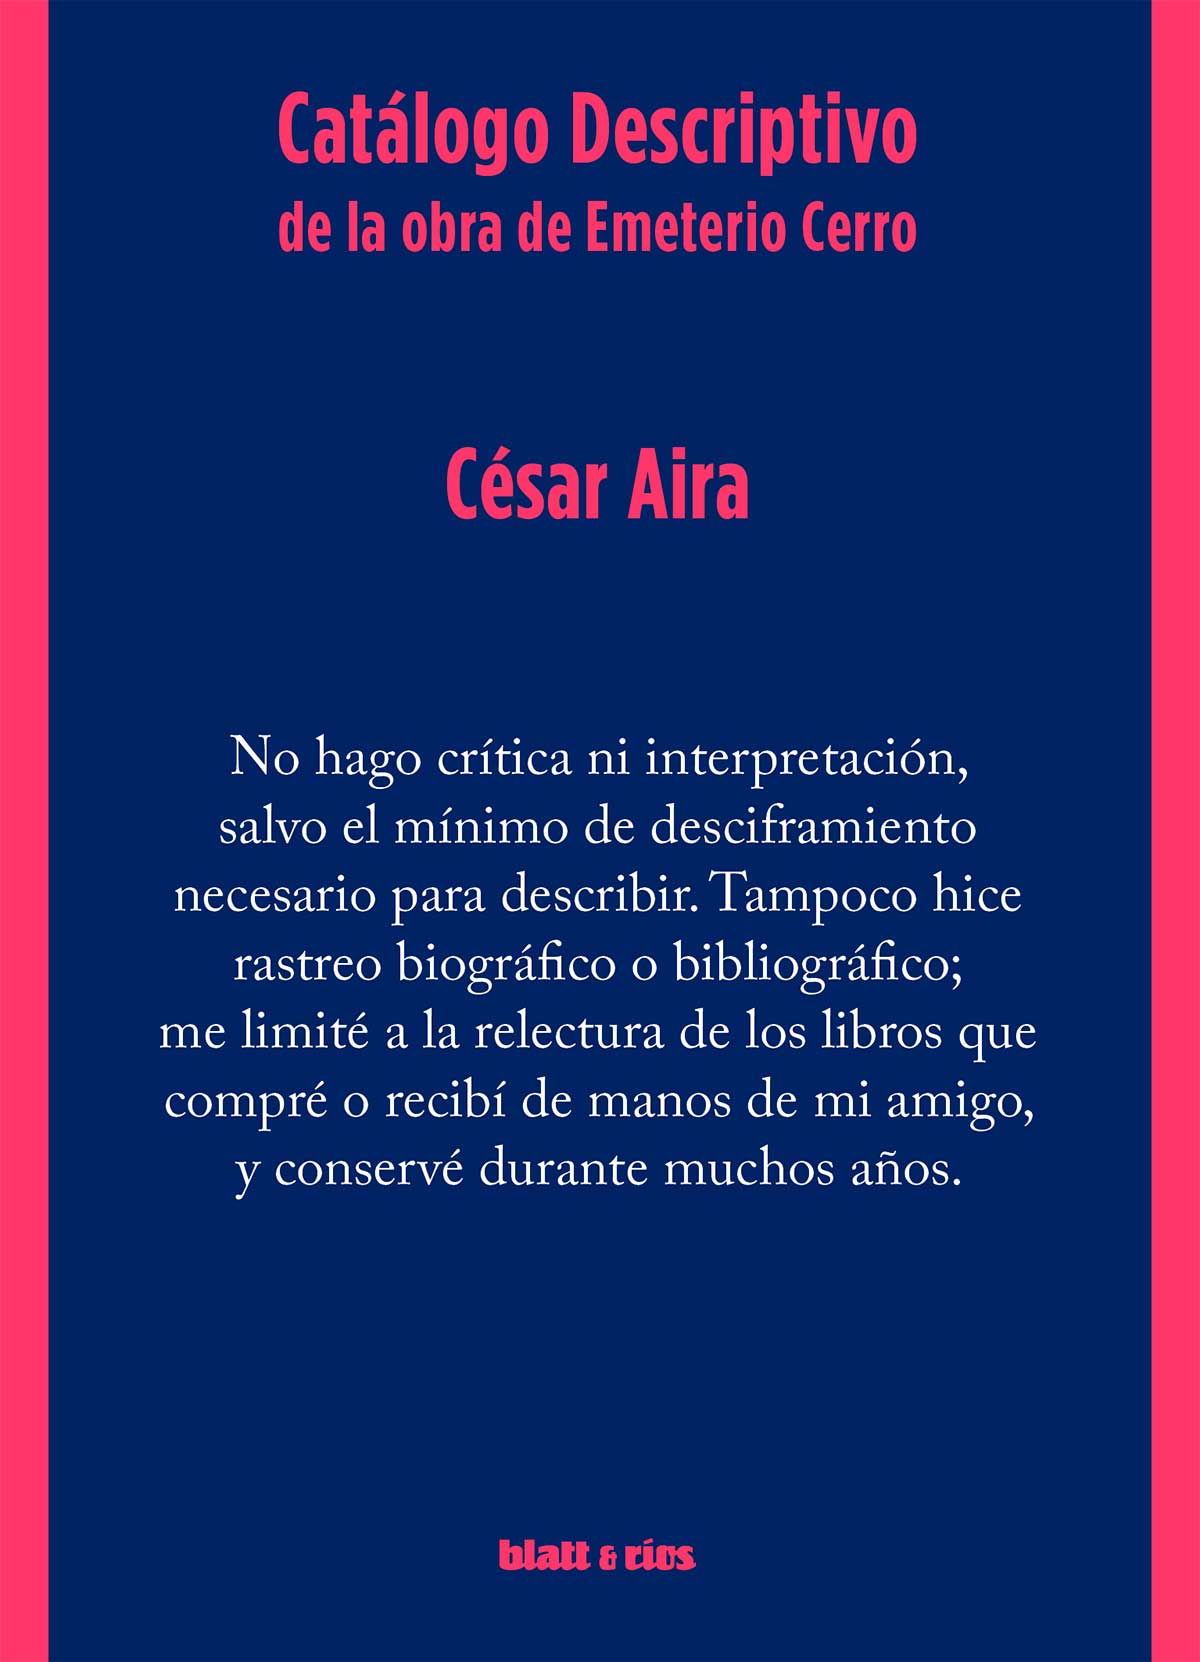 Tapa de Catálogo descriptivo de la obra de Emeterio Cerro, libro de César Aira